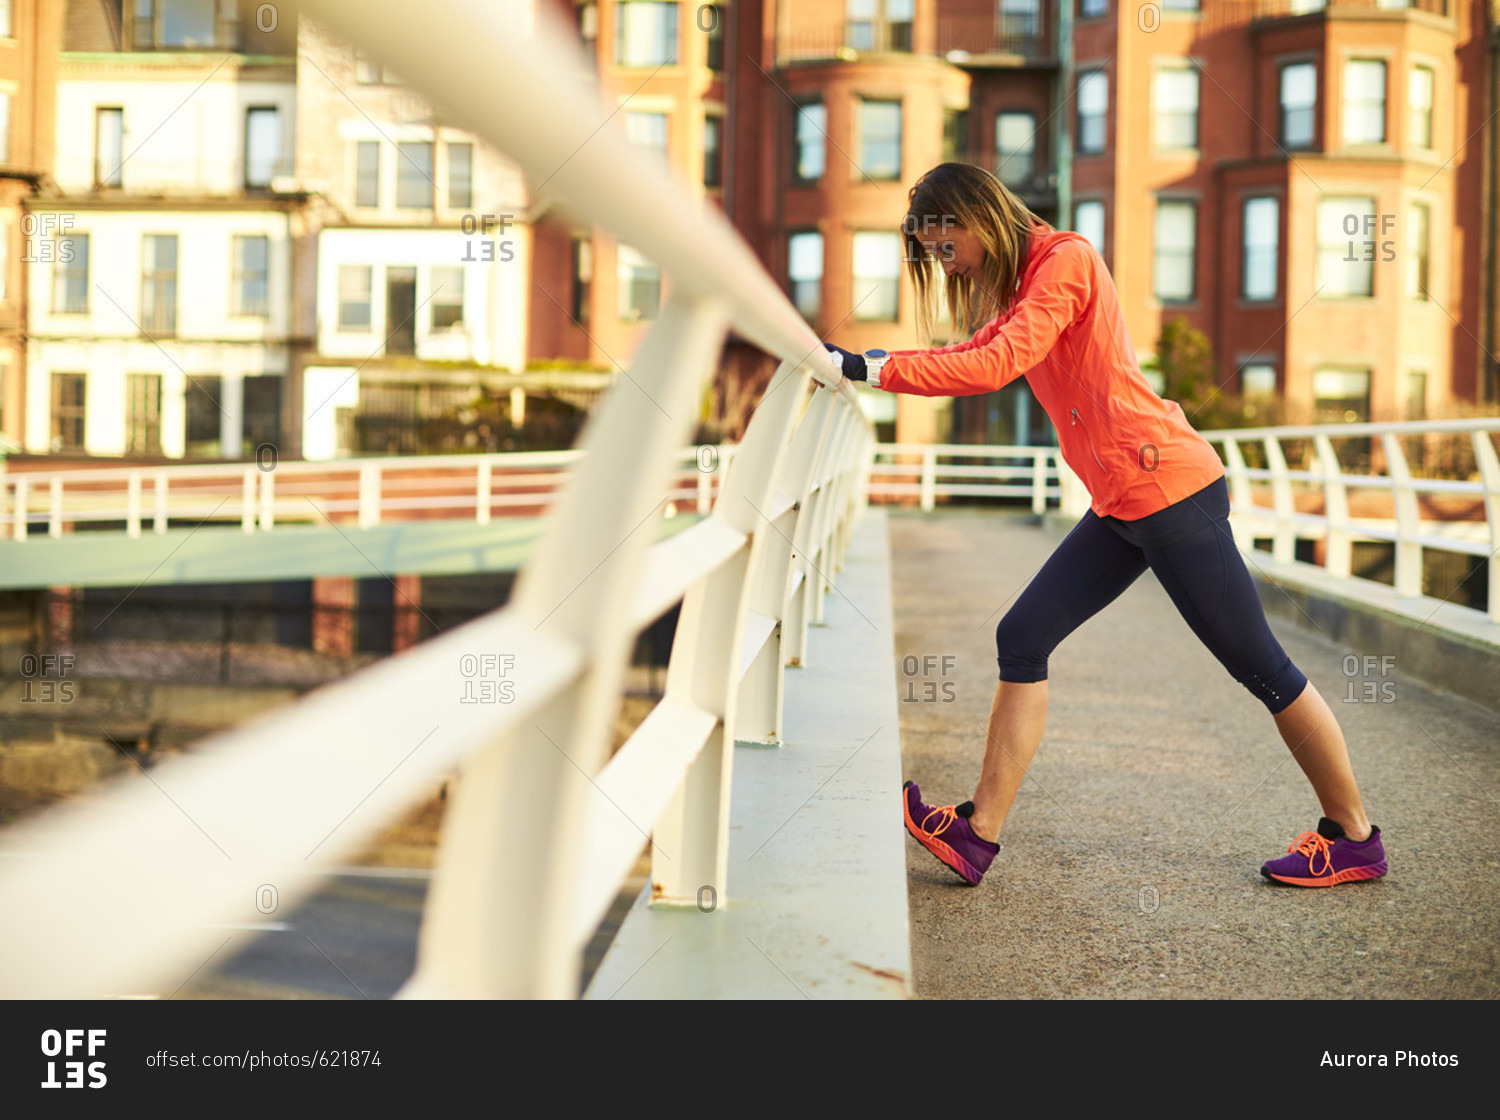 Woman stretching outdoors on bridge barrier, Boston, Massachusetts, USA